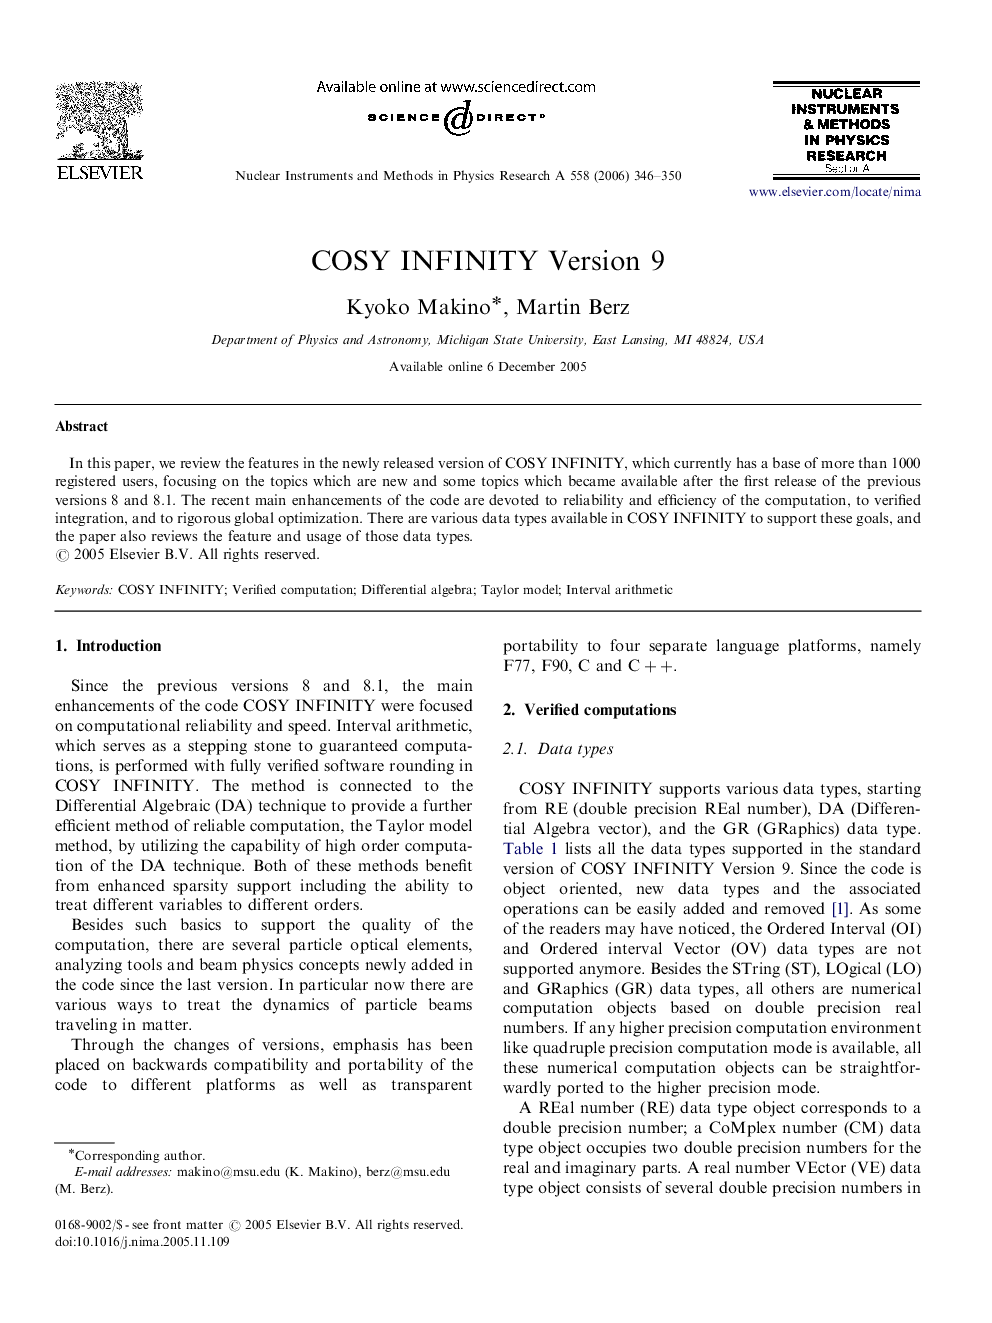 COSY INFINITY Version 9